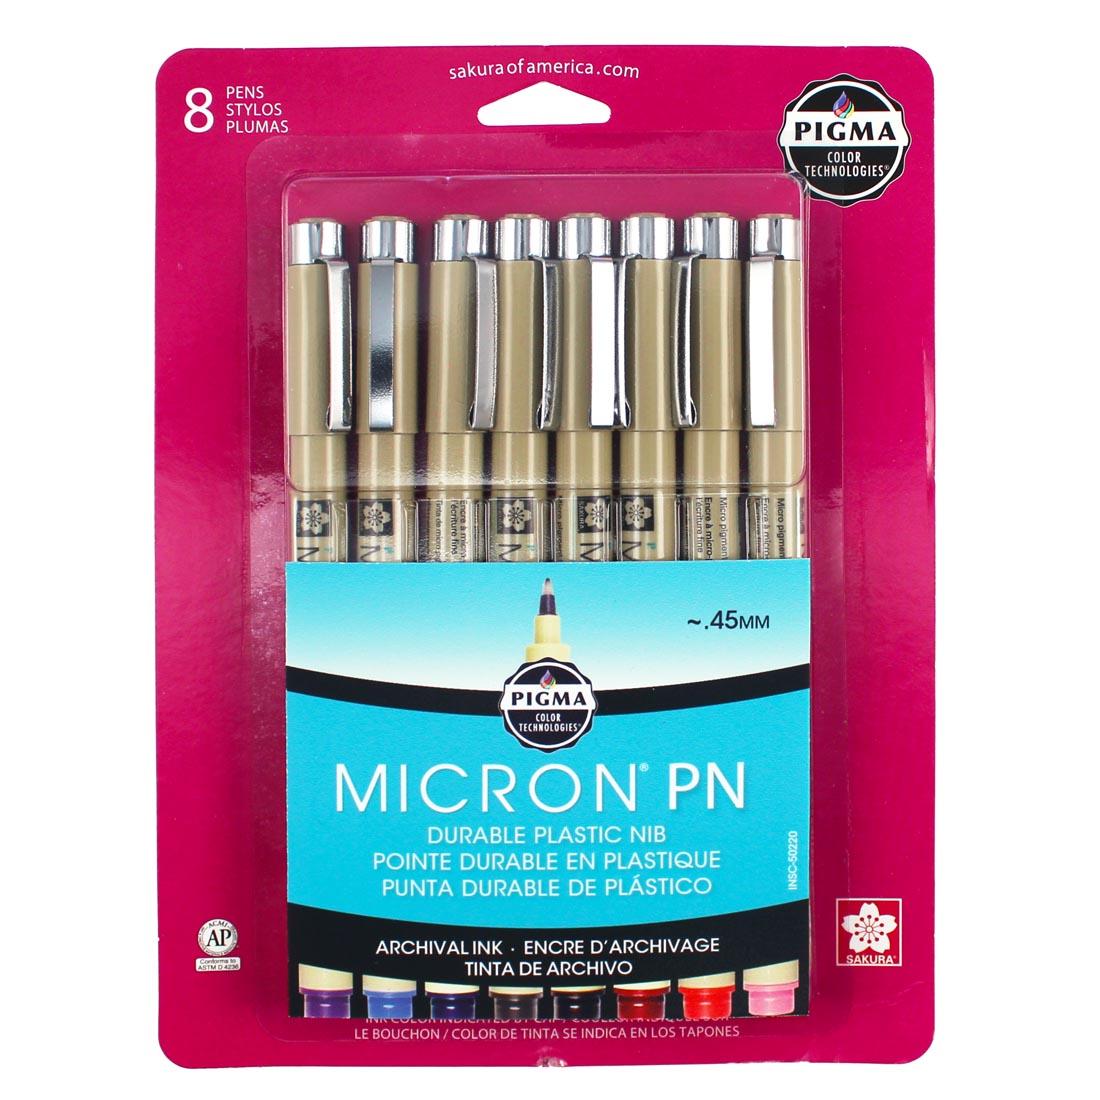 Sakura Pigma Micron PN Pen Set